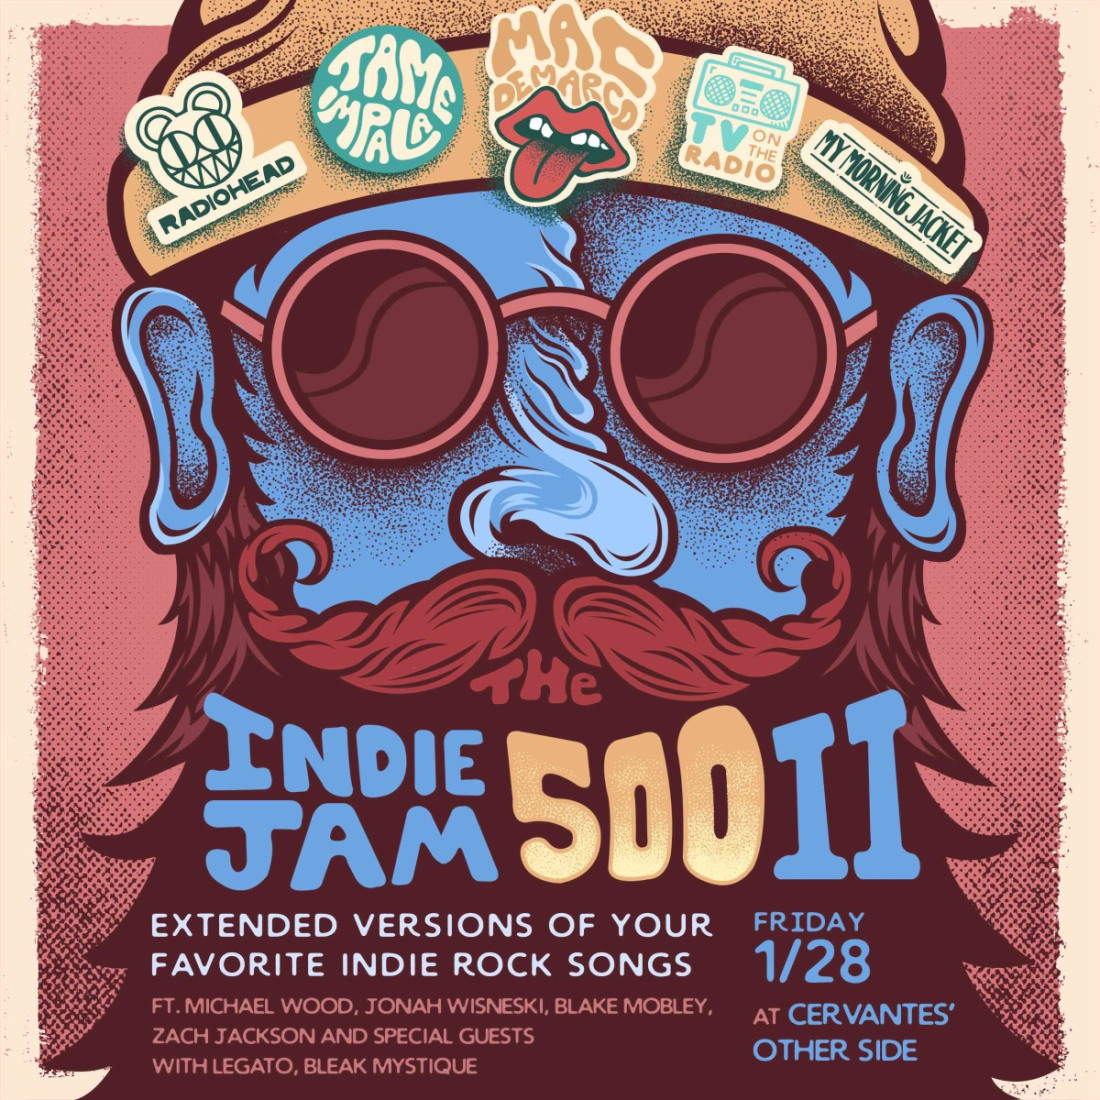 The Indie Jam 500 II: Extended Versions of Your Favorite Indie Rock Songs w/ Legato, Bleak Mystique